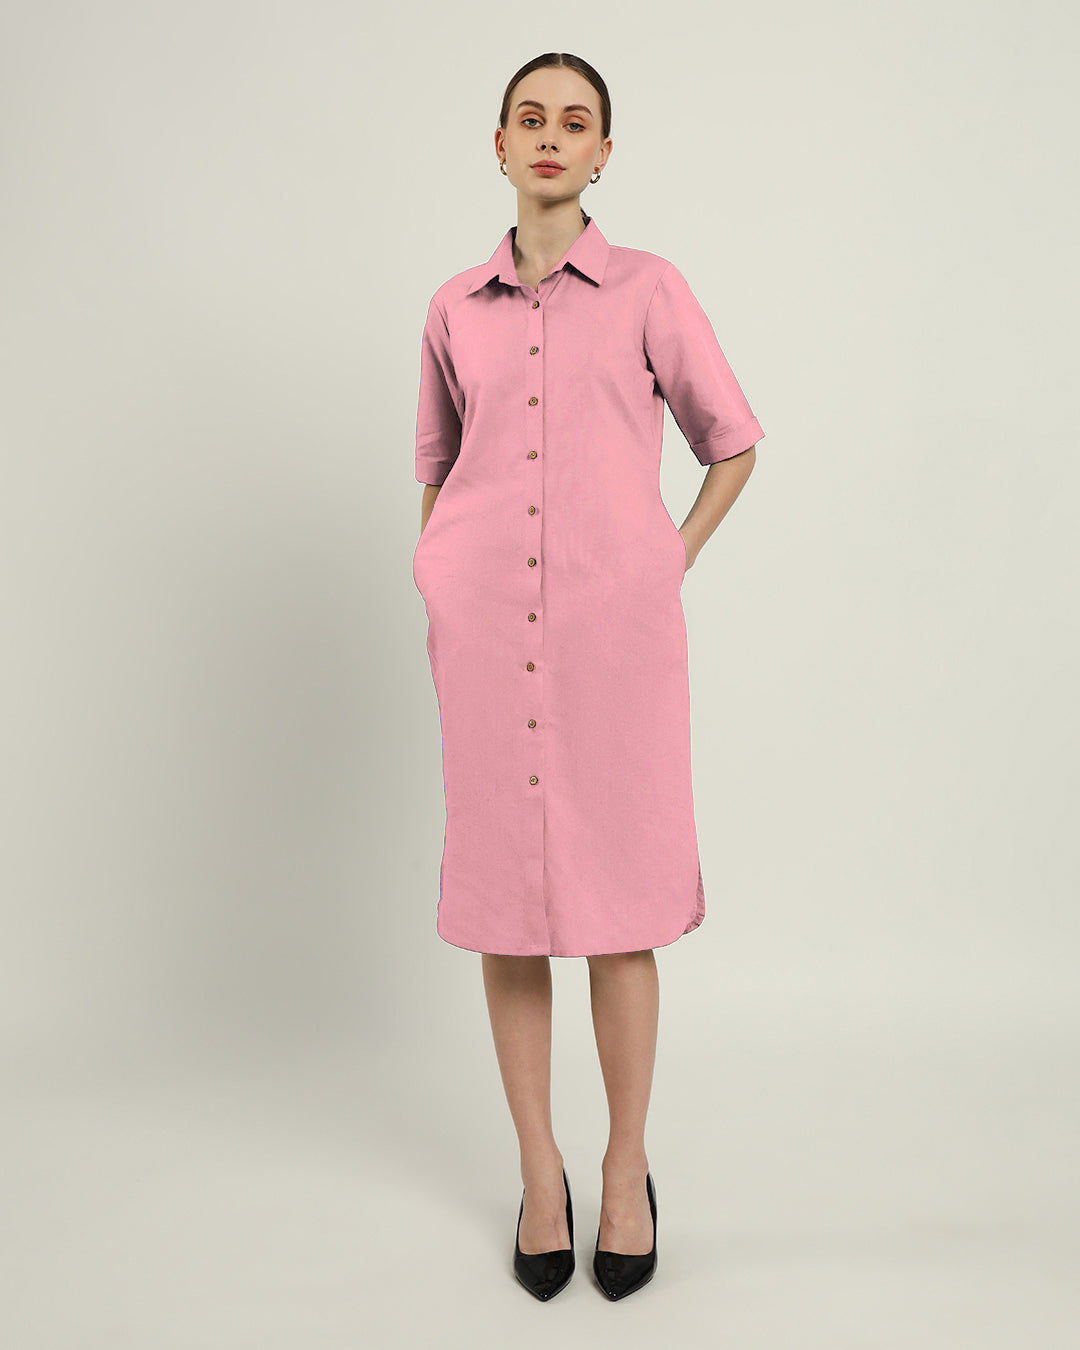 The Tampa Fondant Pink Cotton Dress